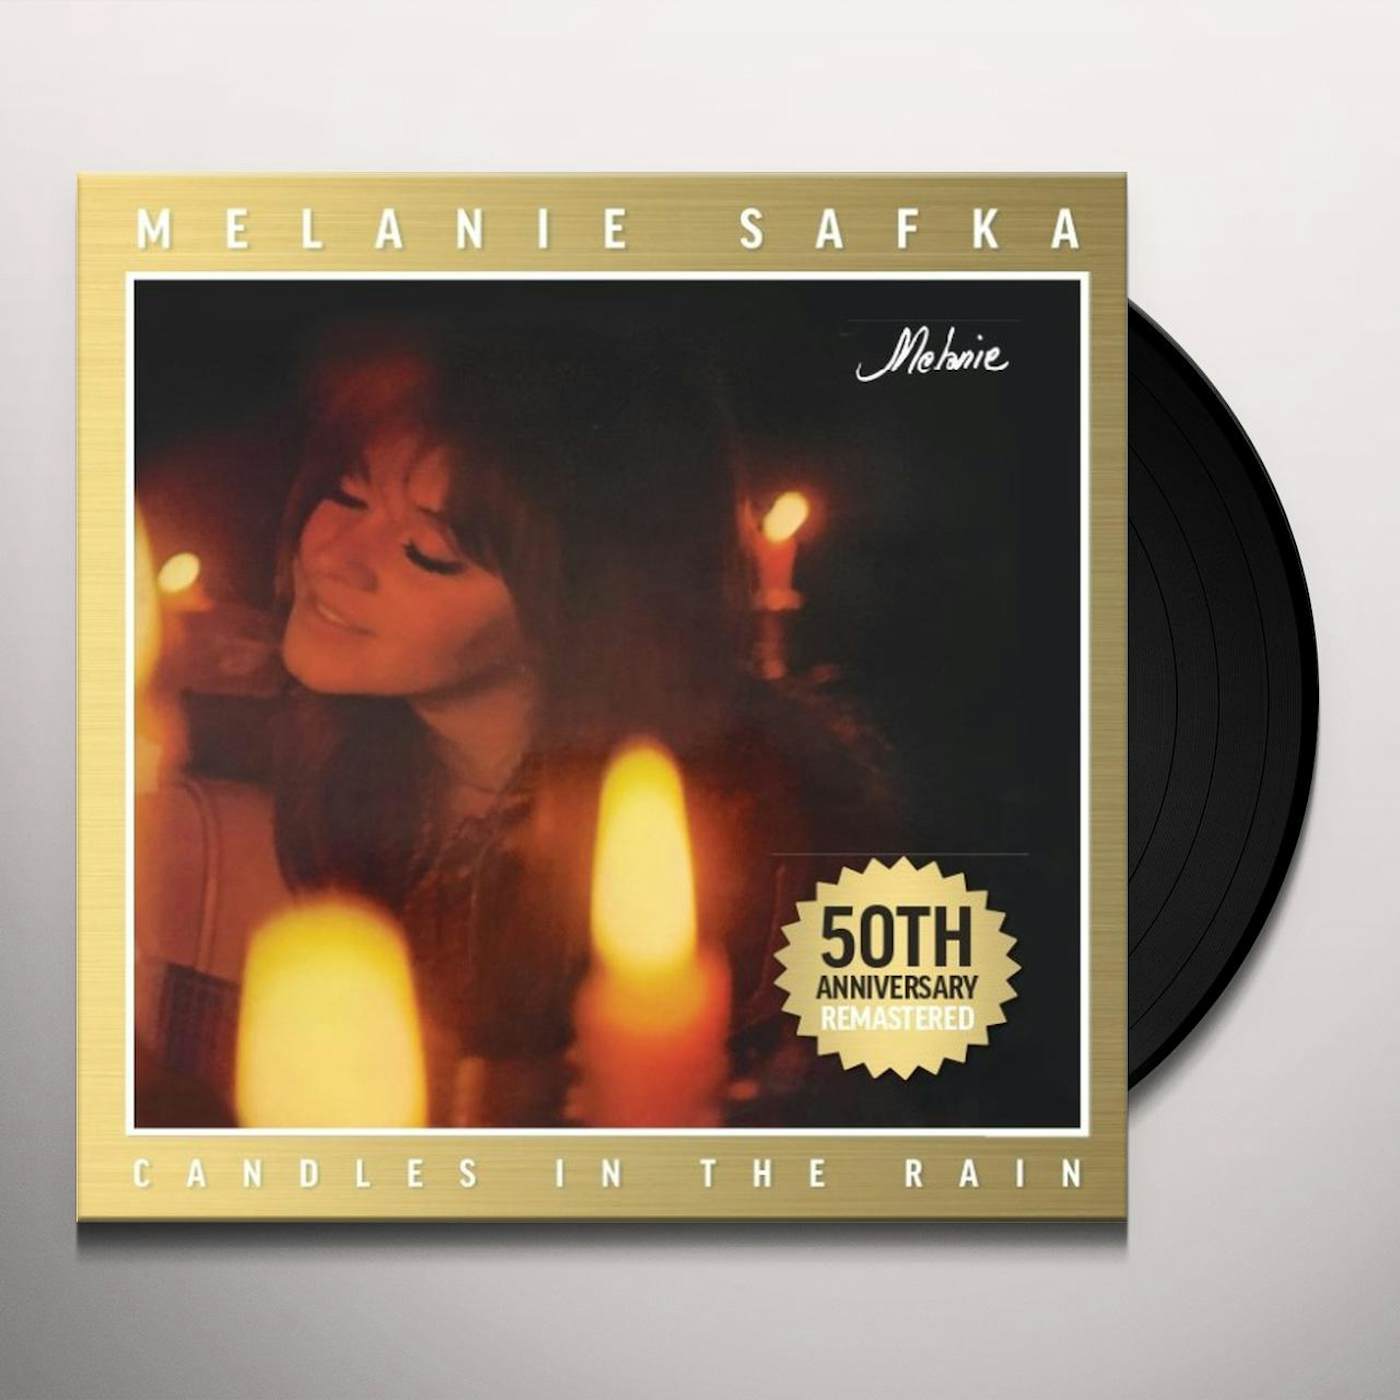 Melanie CANDLES IN THE RAIN: 50TH ANNIVERSARY Vinyl Record